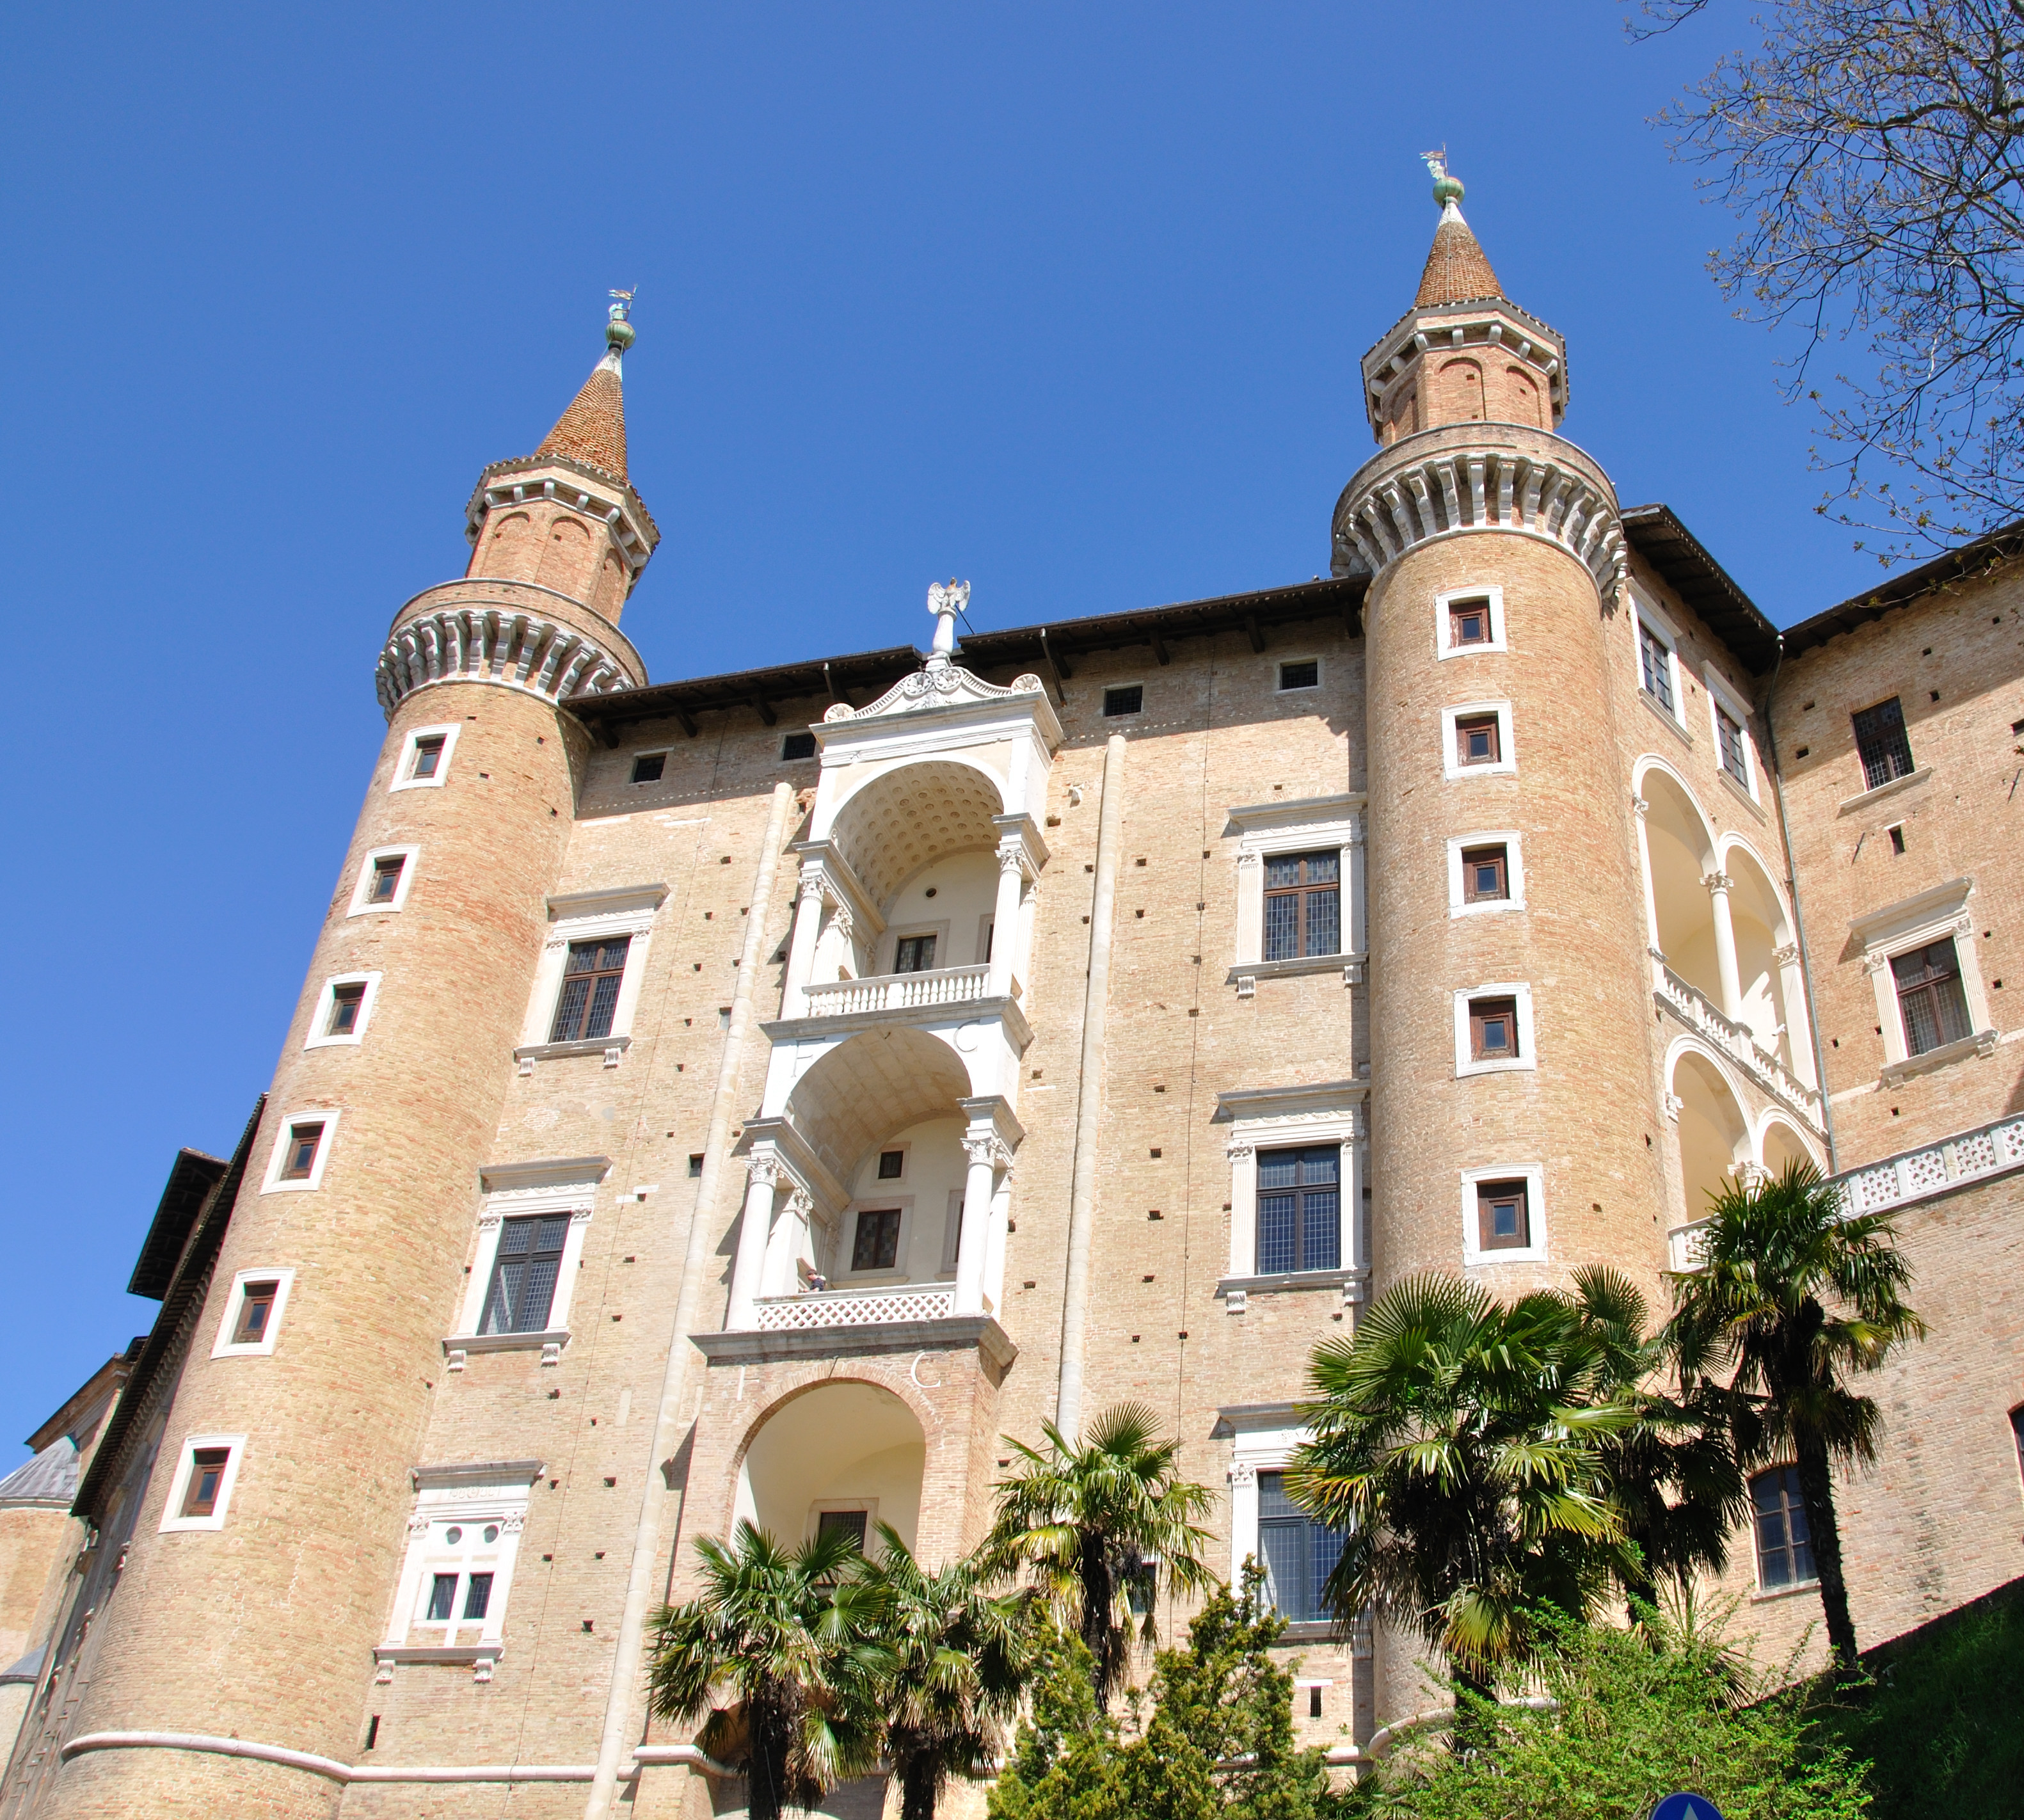 Palazzo Ducale Urbino